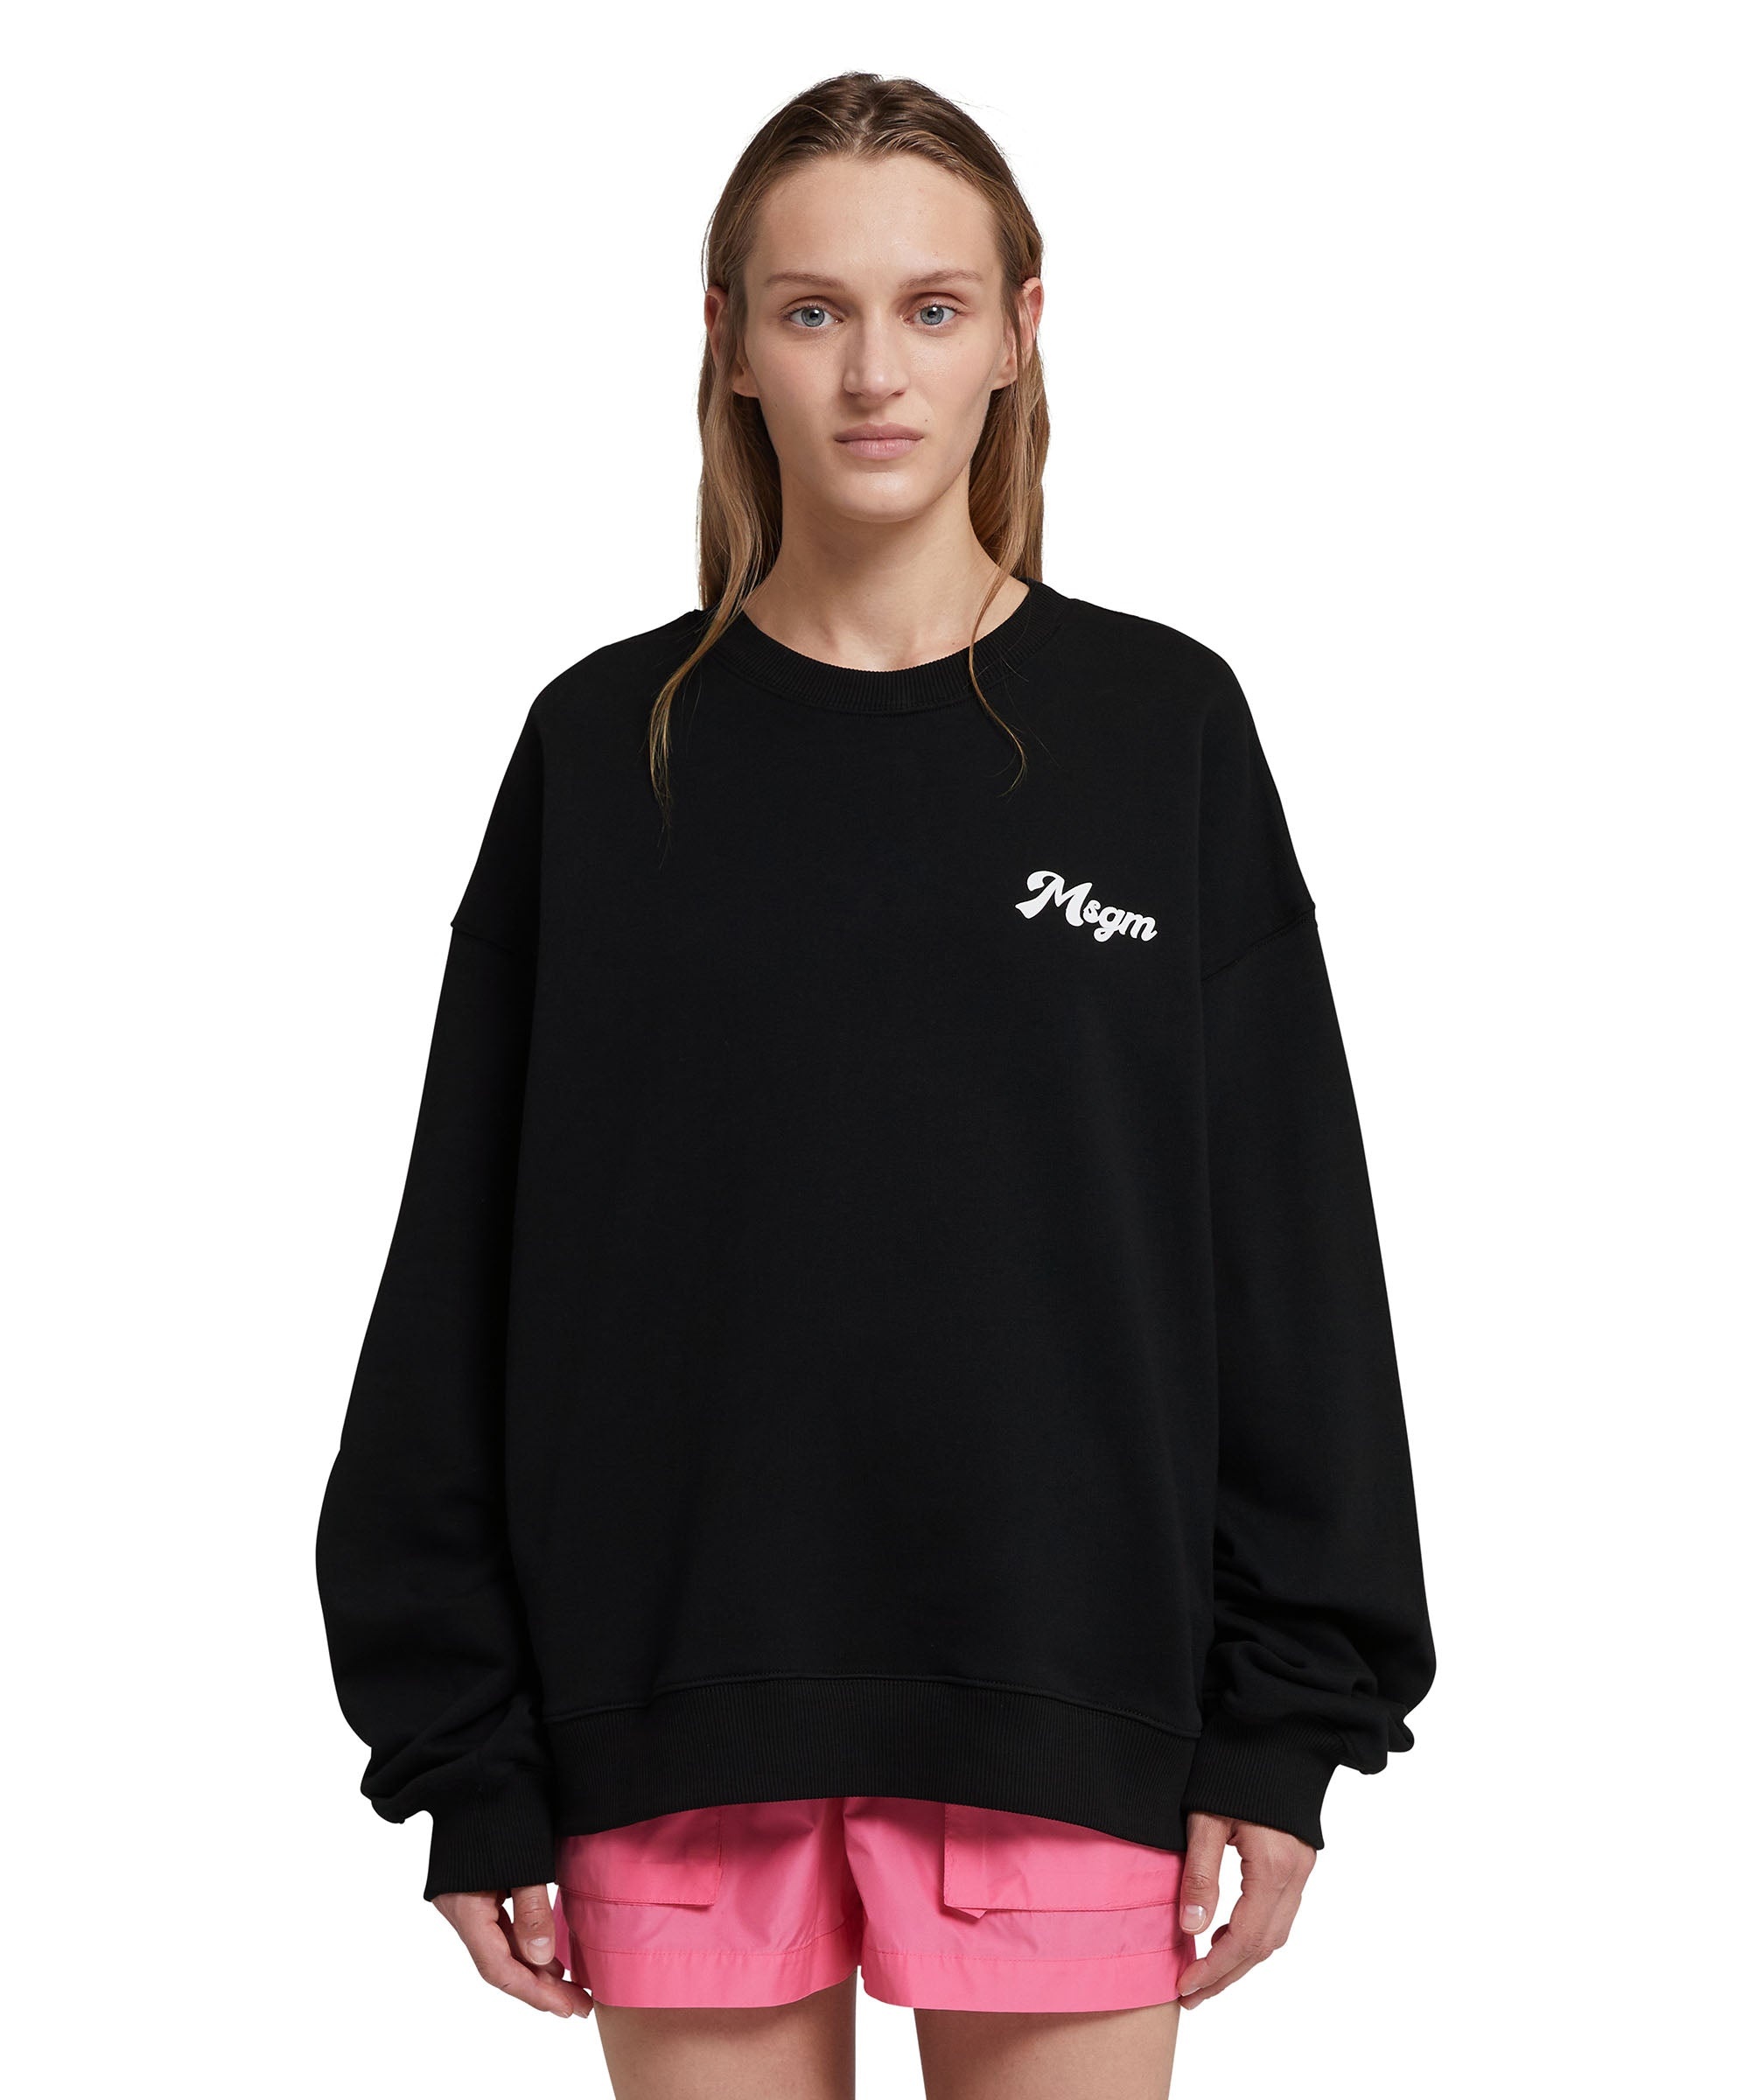 Sweatshirt with "bar Milano" graphic - 2